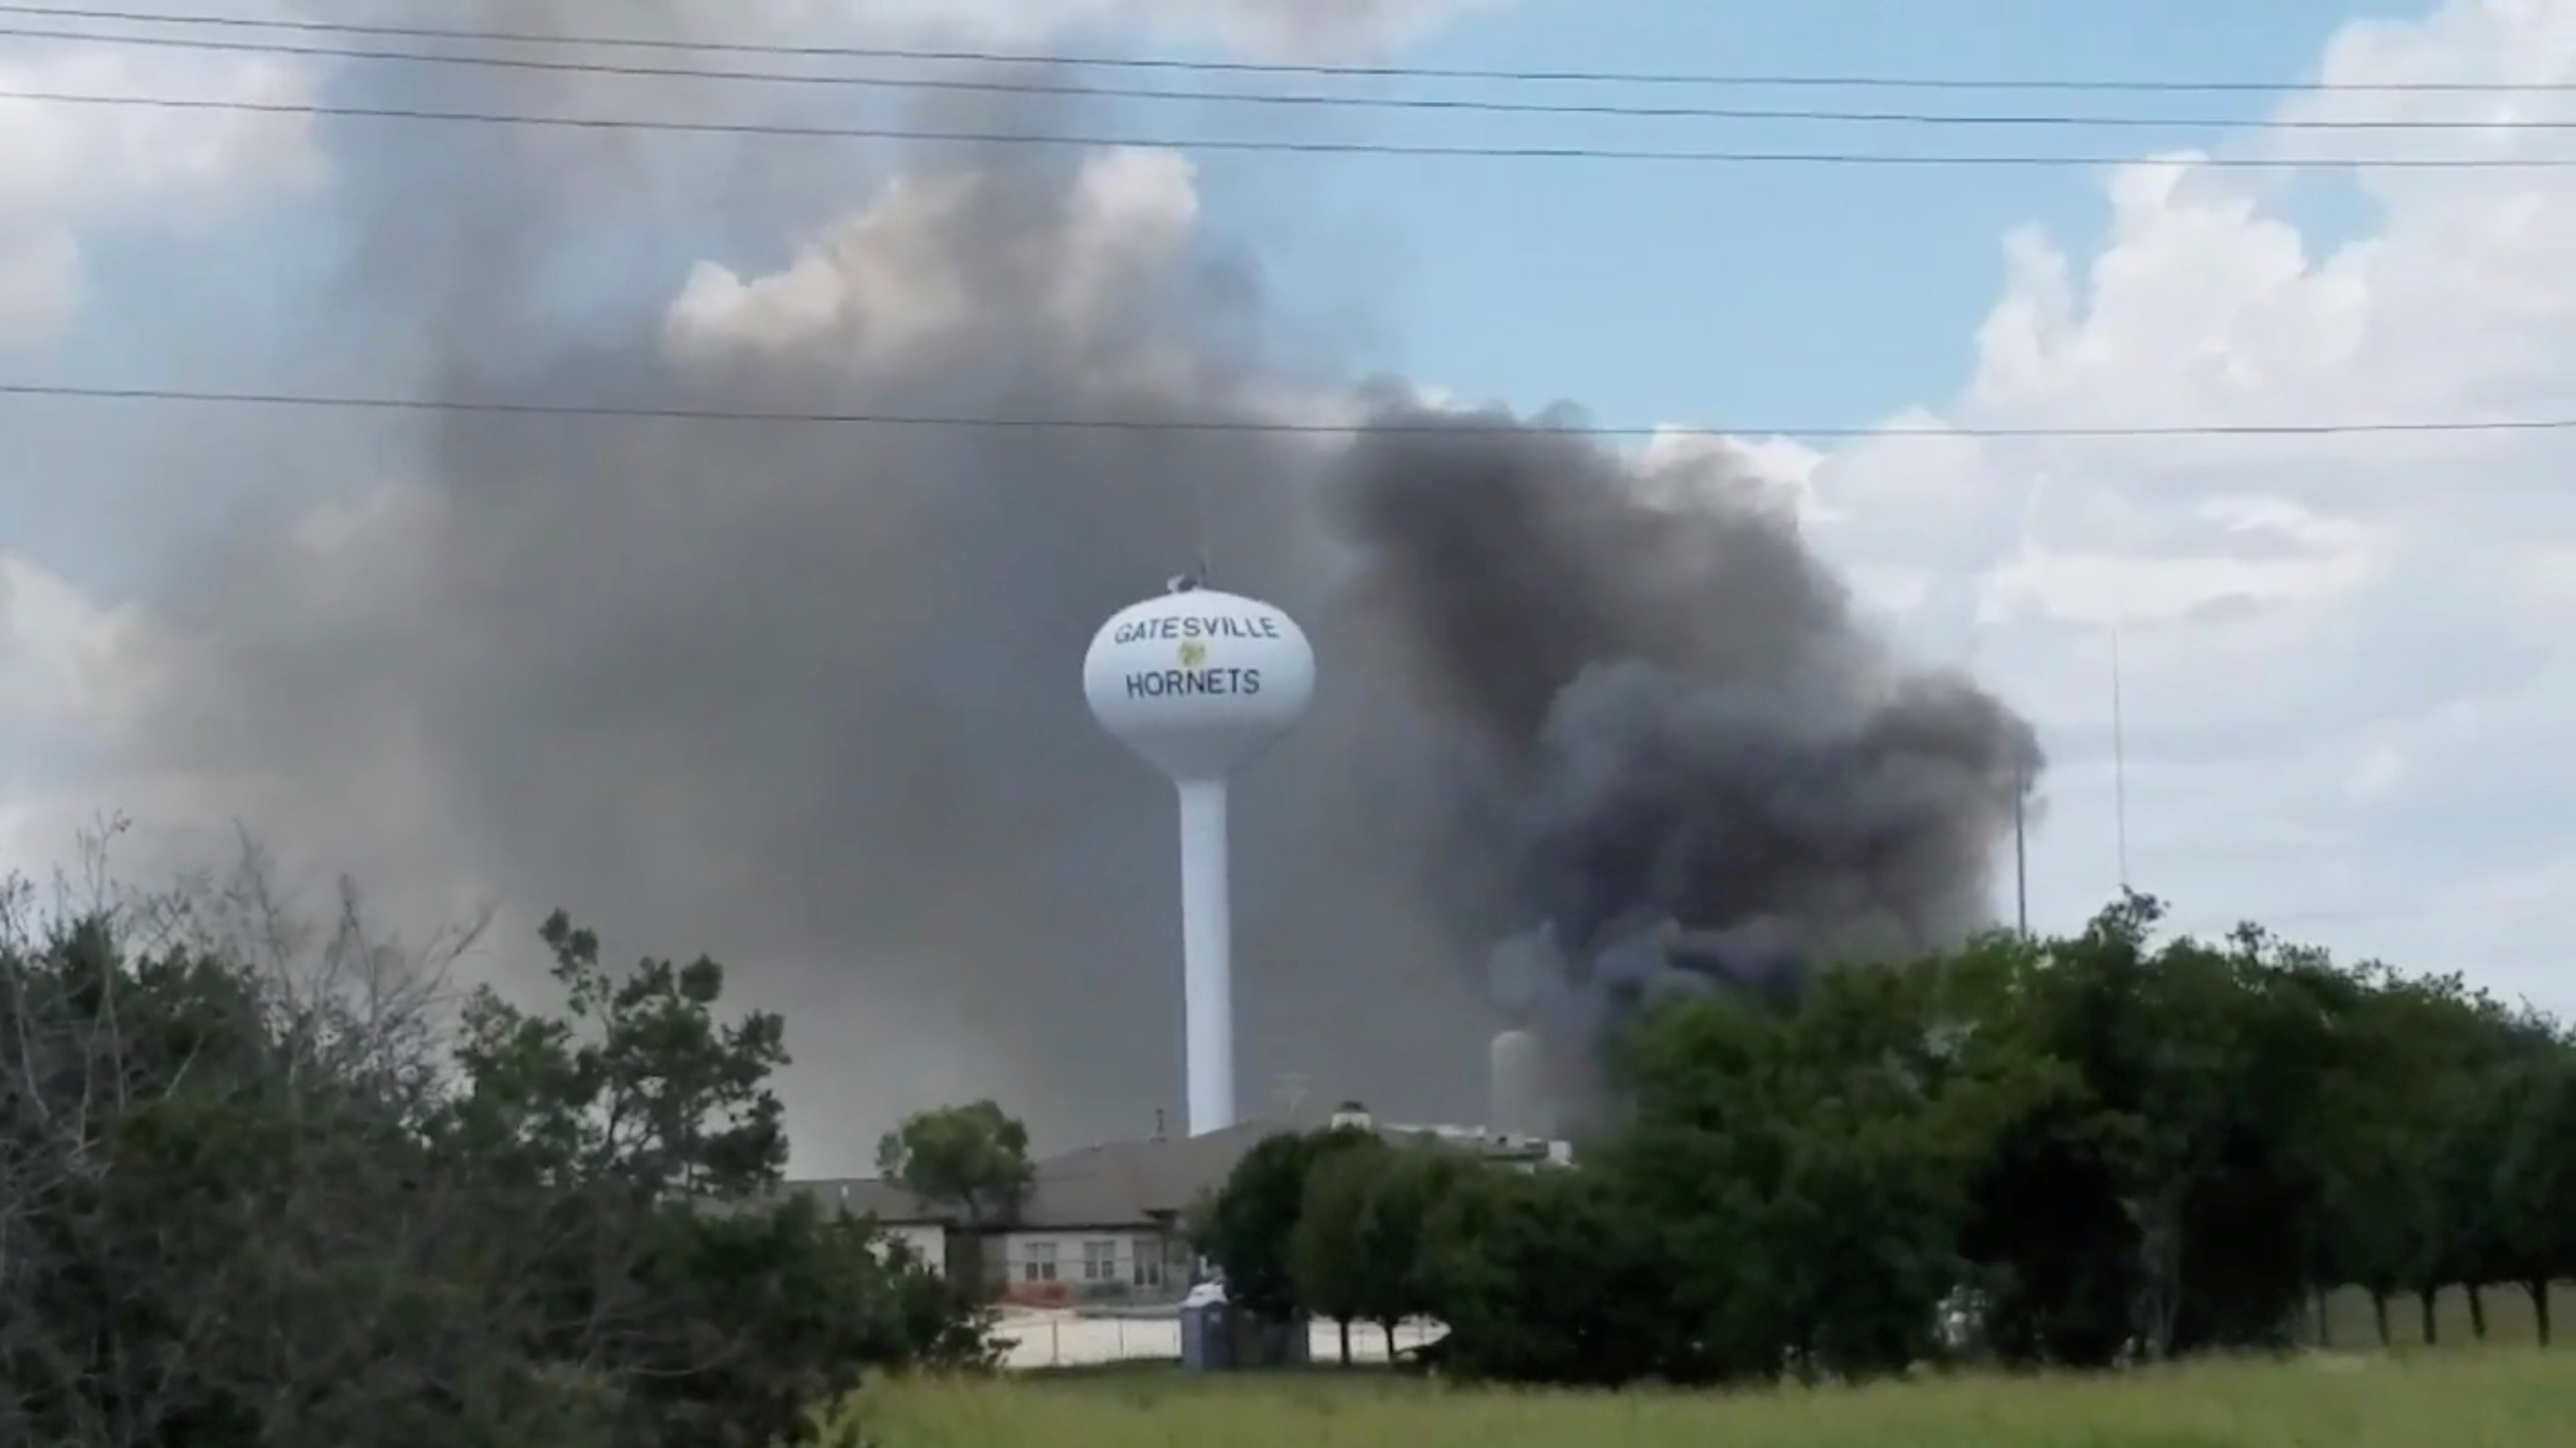 Se registra explosión en hospital de Gatesville, Texas (Fotos)